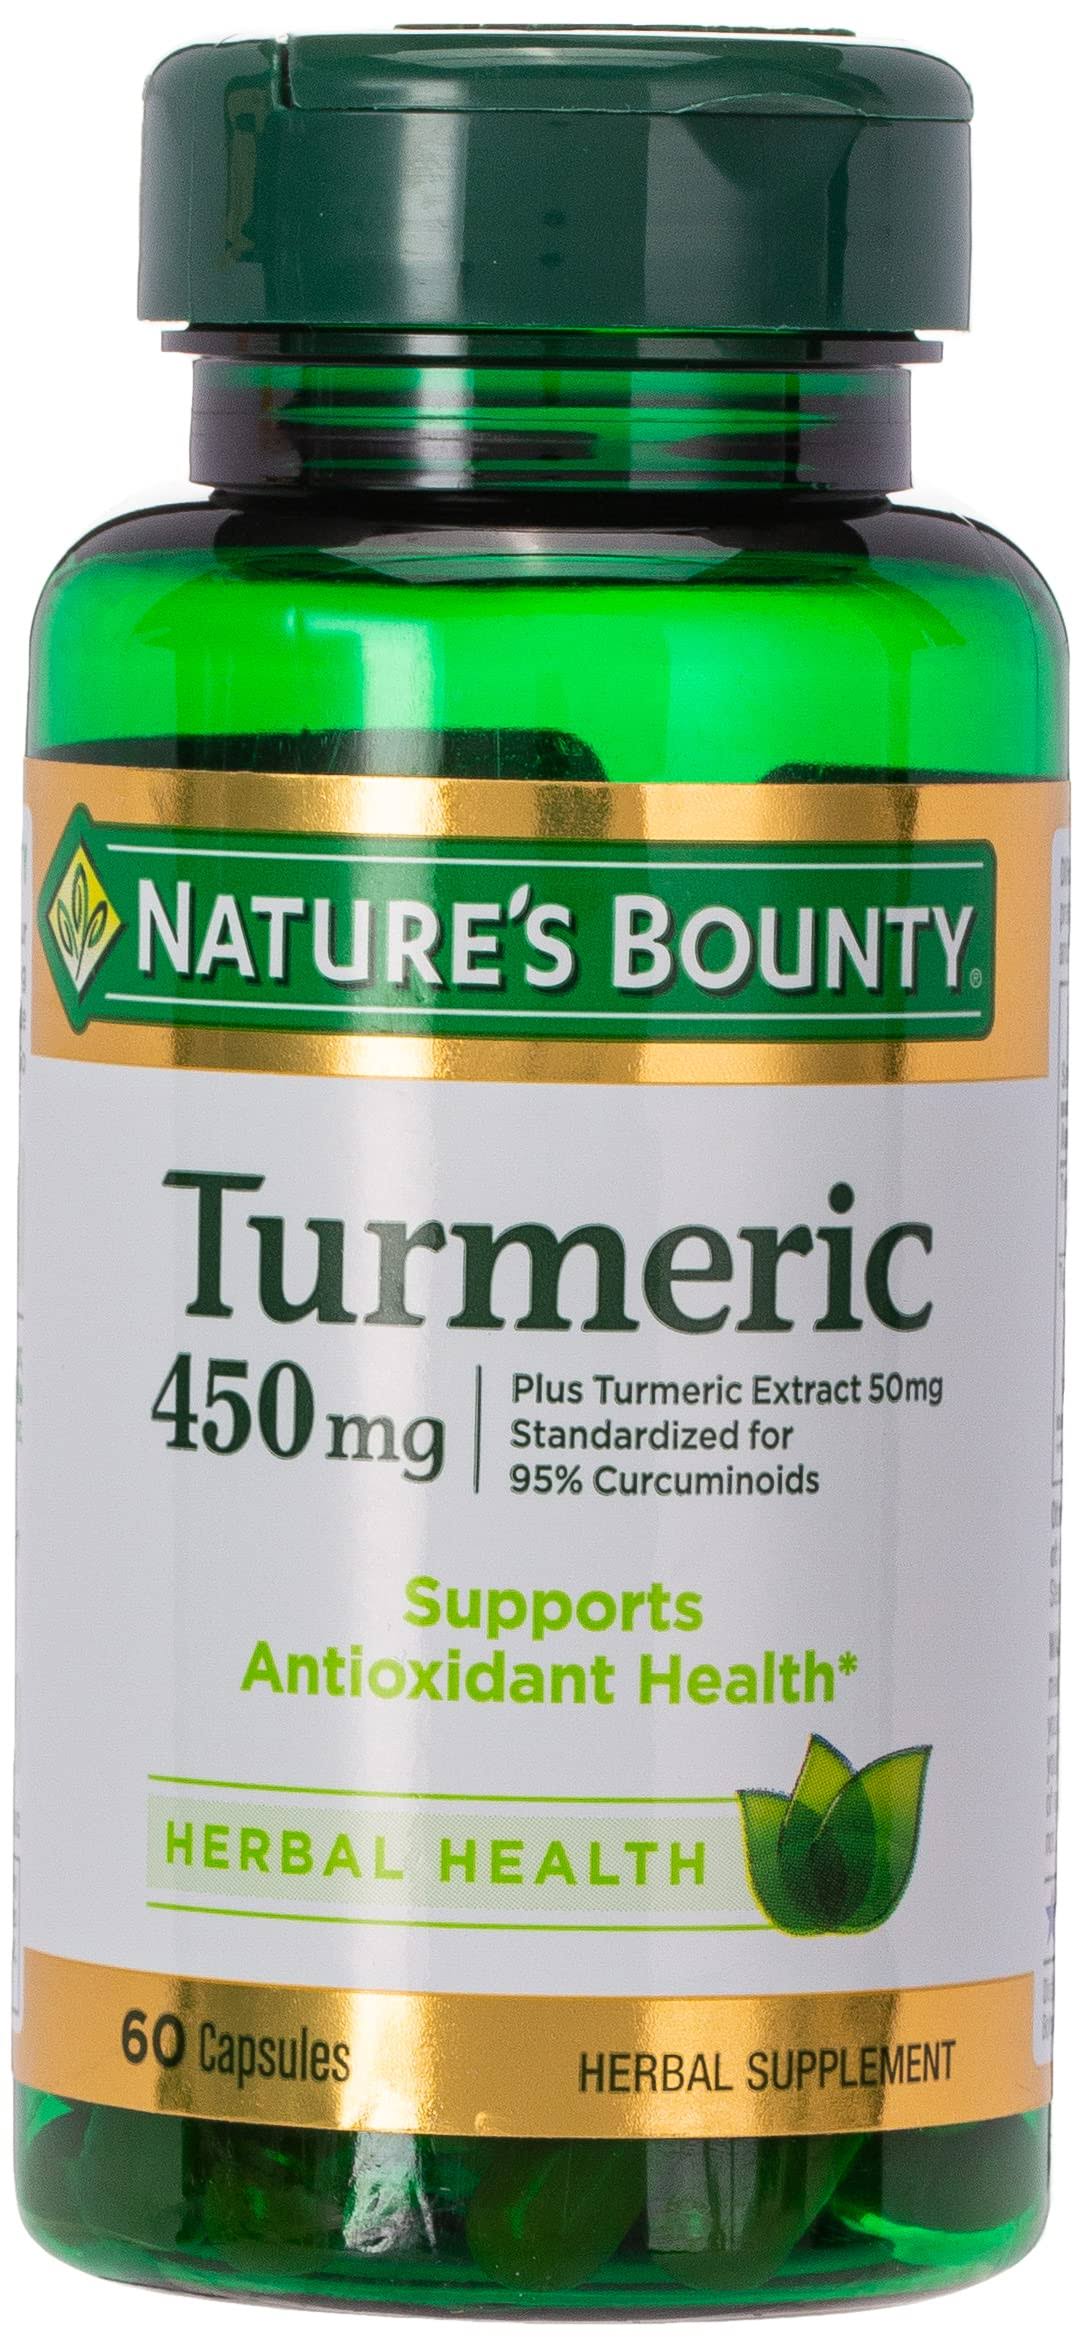 Nature's Bounty Turmeric - 450mg, 60 Capsules